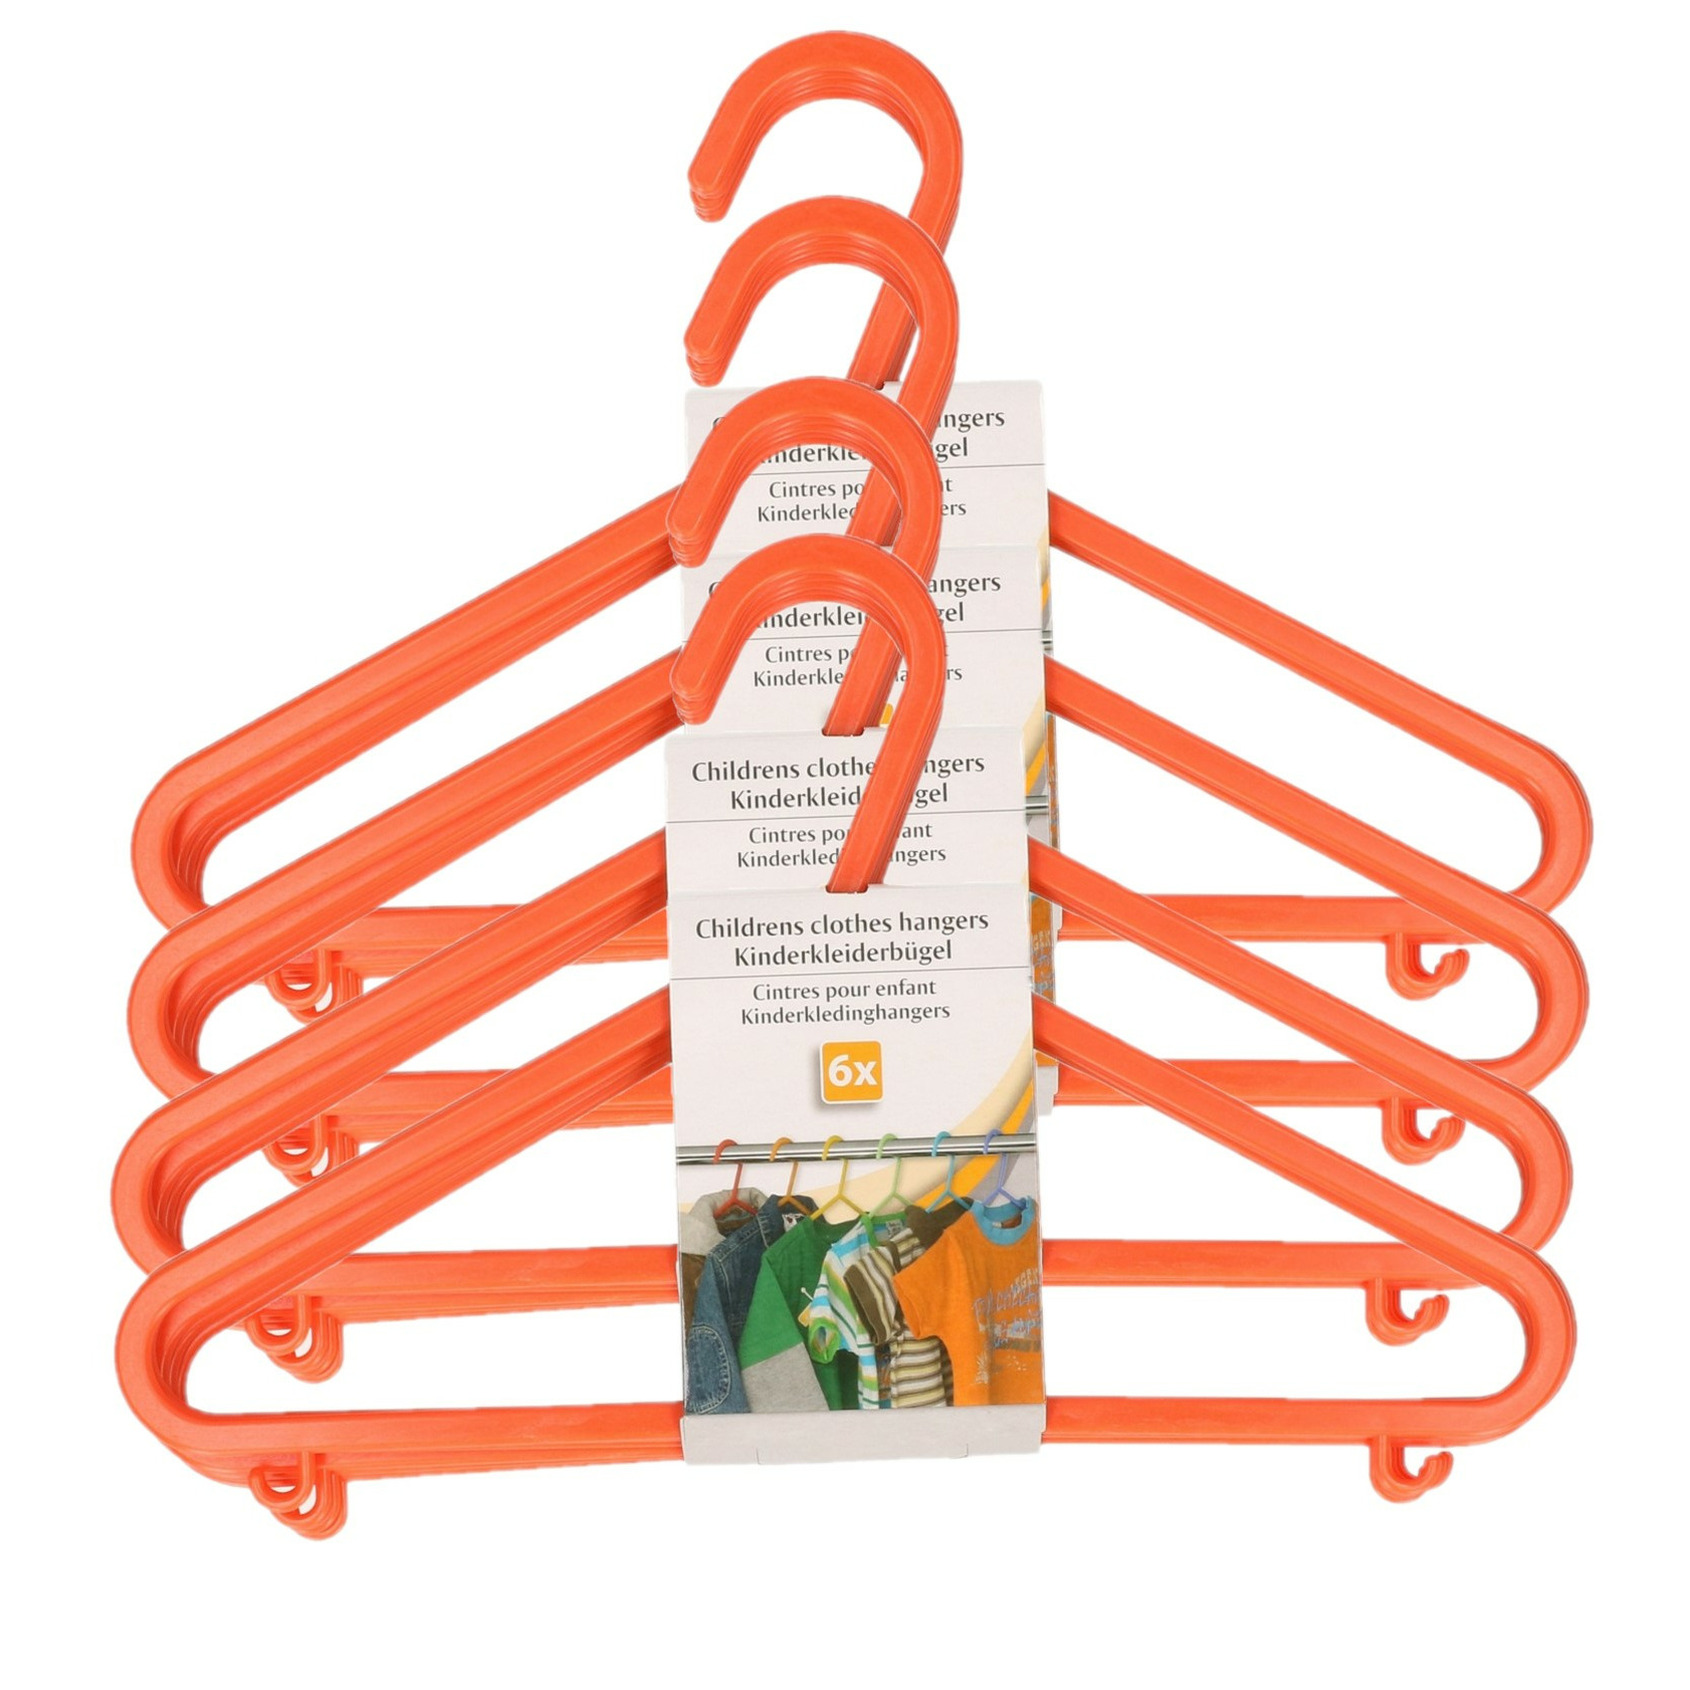 Plastic kinderkleding-baby kledinghangers oranje 48x stuks 17 x 28 cm